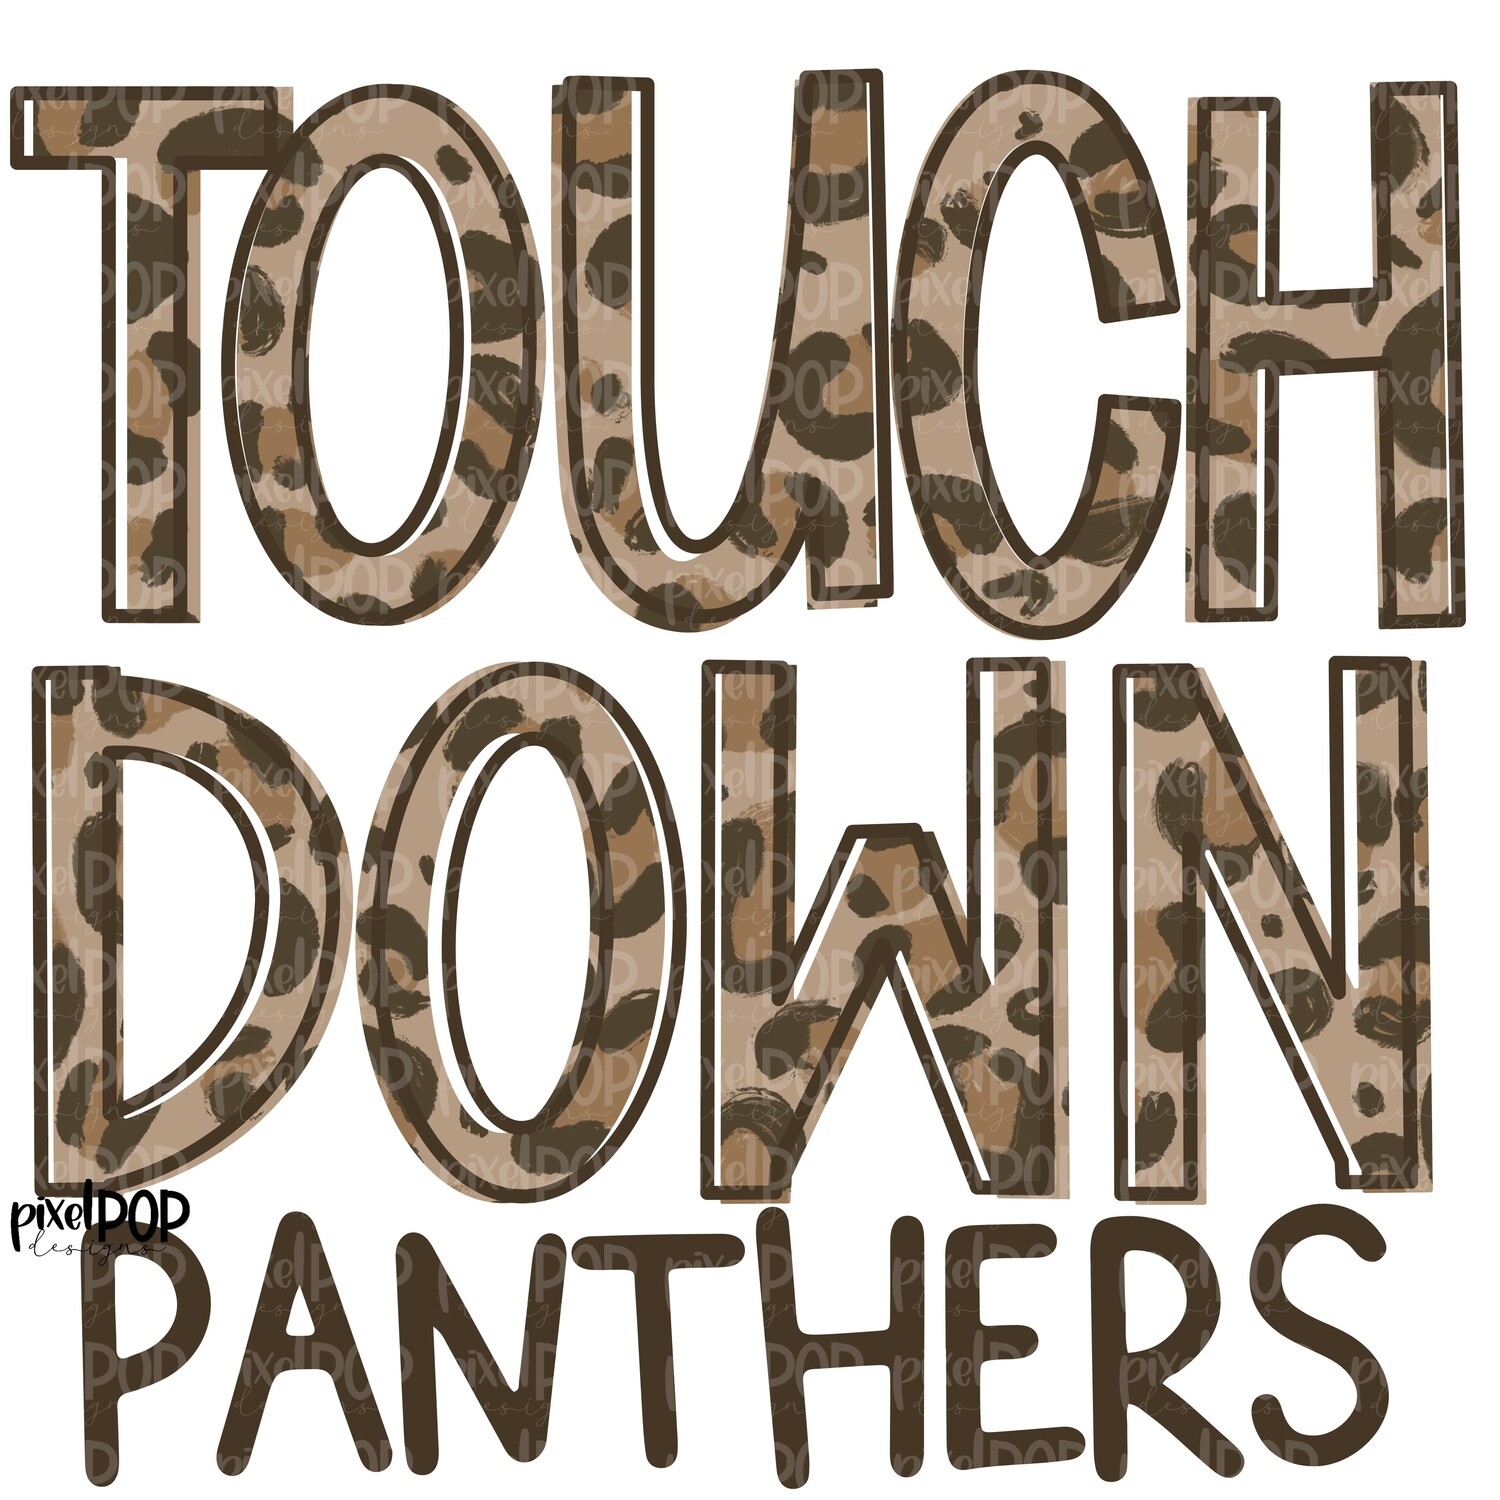 Panthers Touchdown Leopard Print Mascot PNG | Panthers Sublimation Design | Team Spirit Design | Panthers Clip Art | Digital Download | Printable Artwork | Sports Art